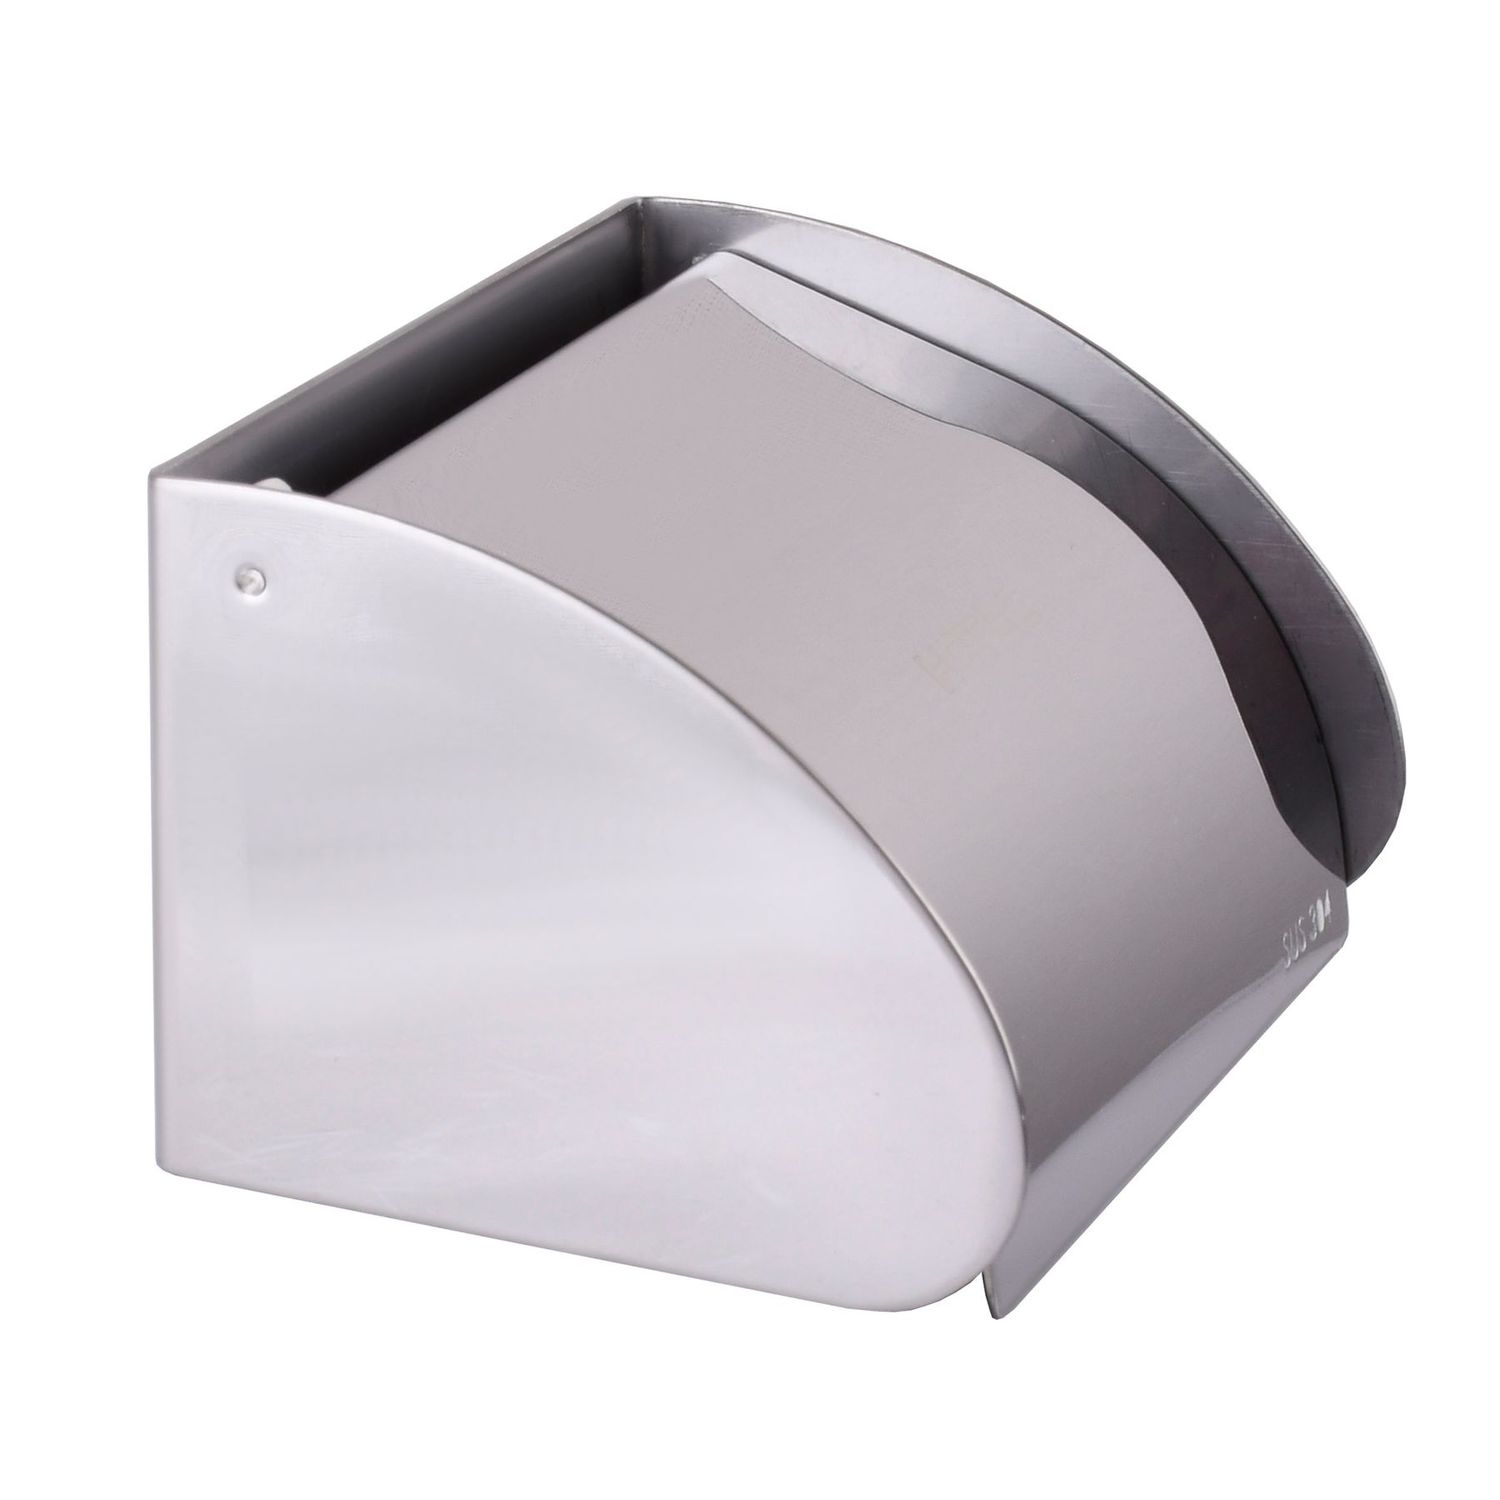 Диспенсер для туалетной бумаги HOTEC 16621 Stainless Steel